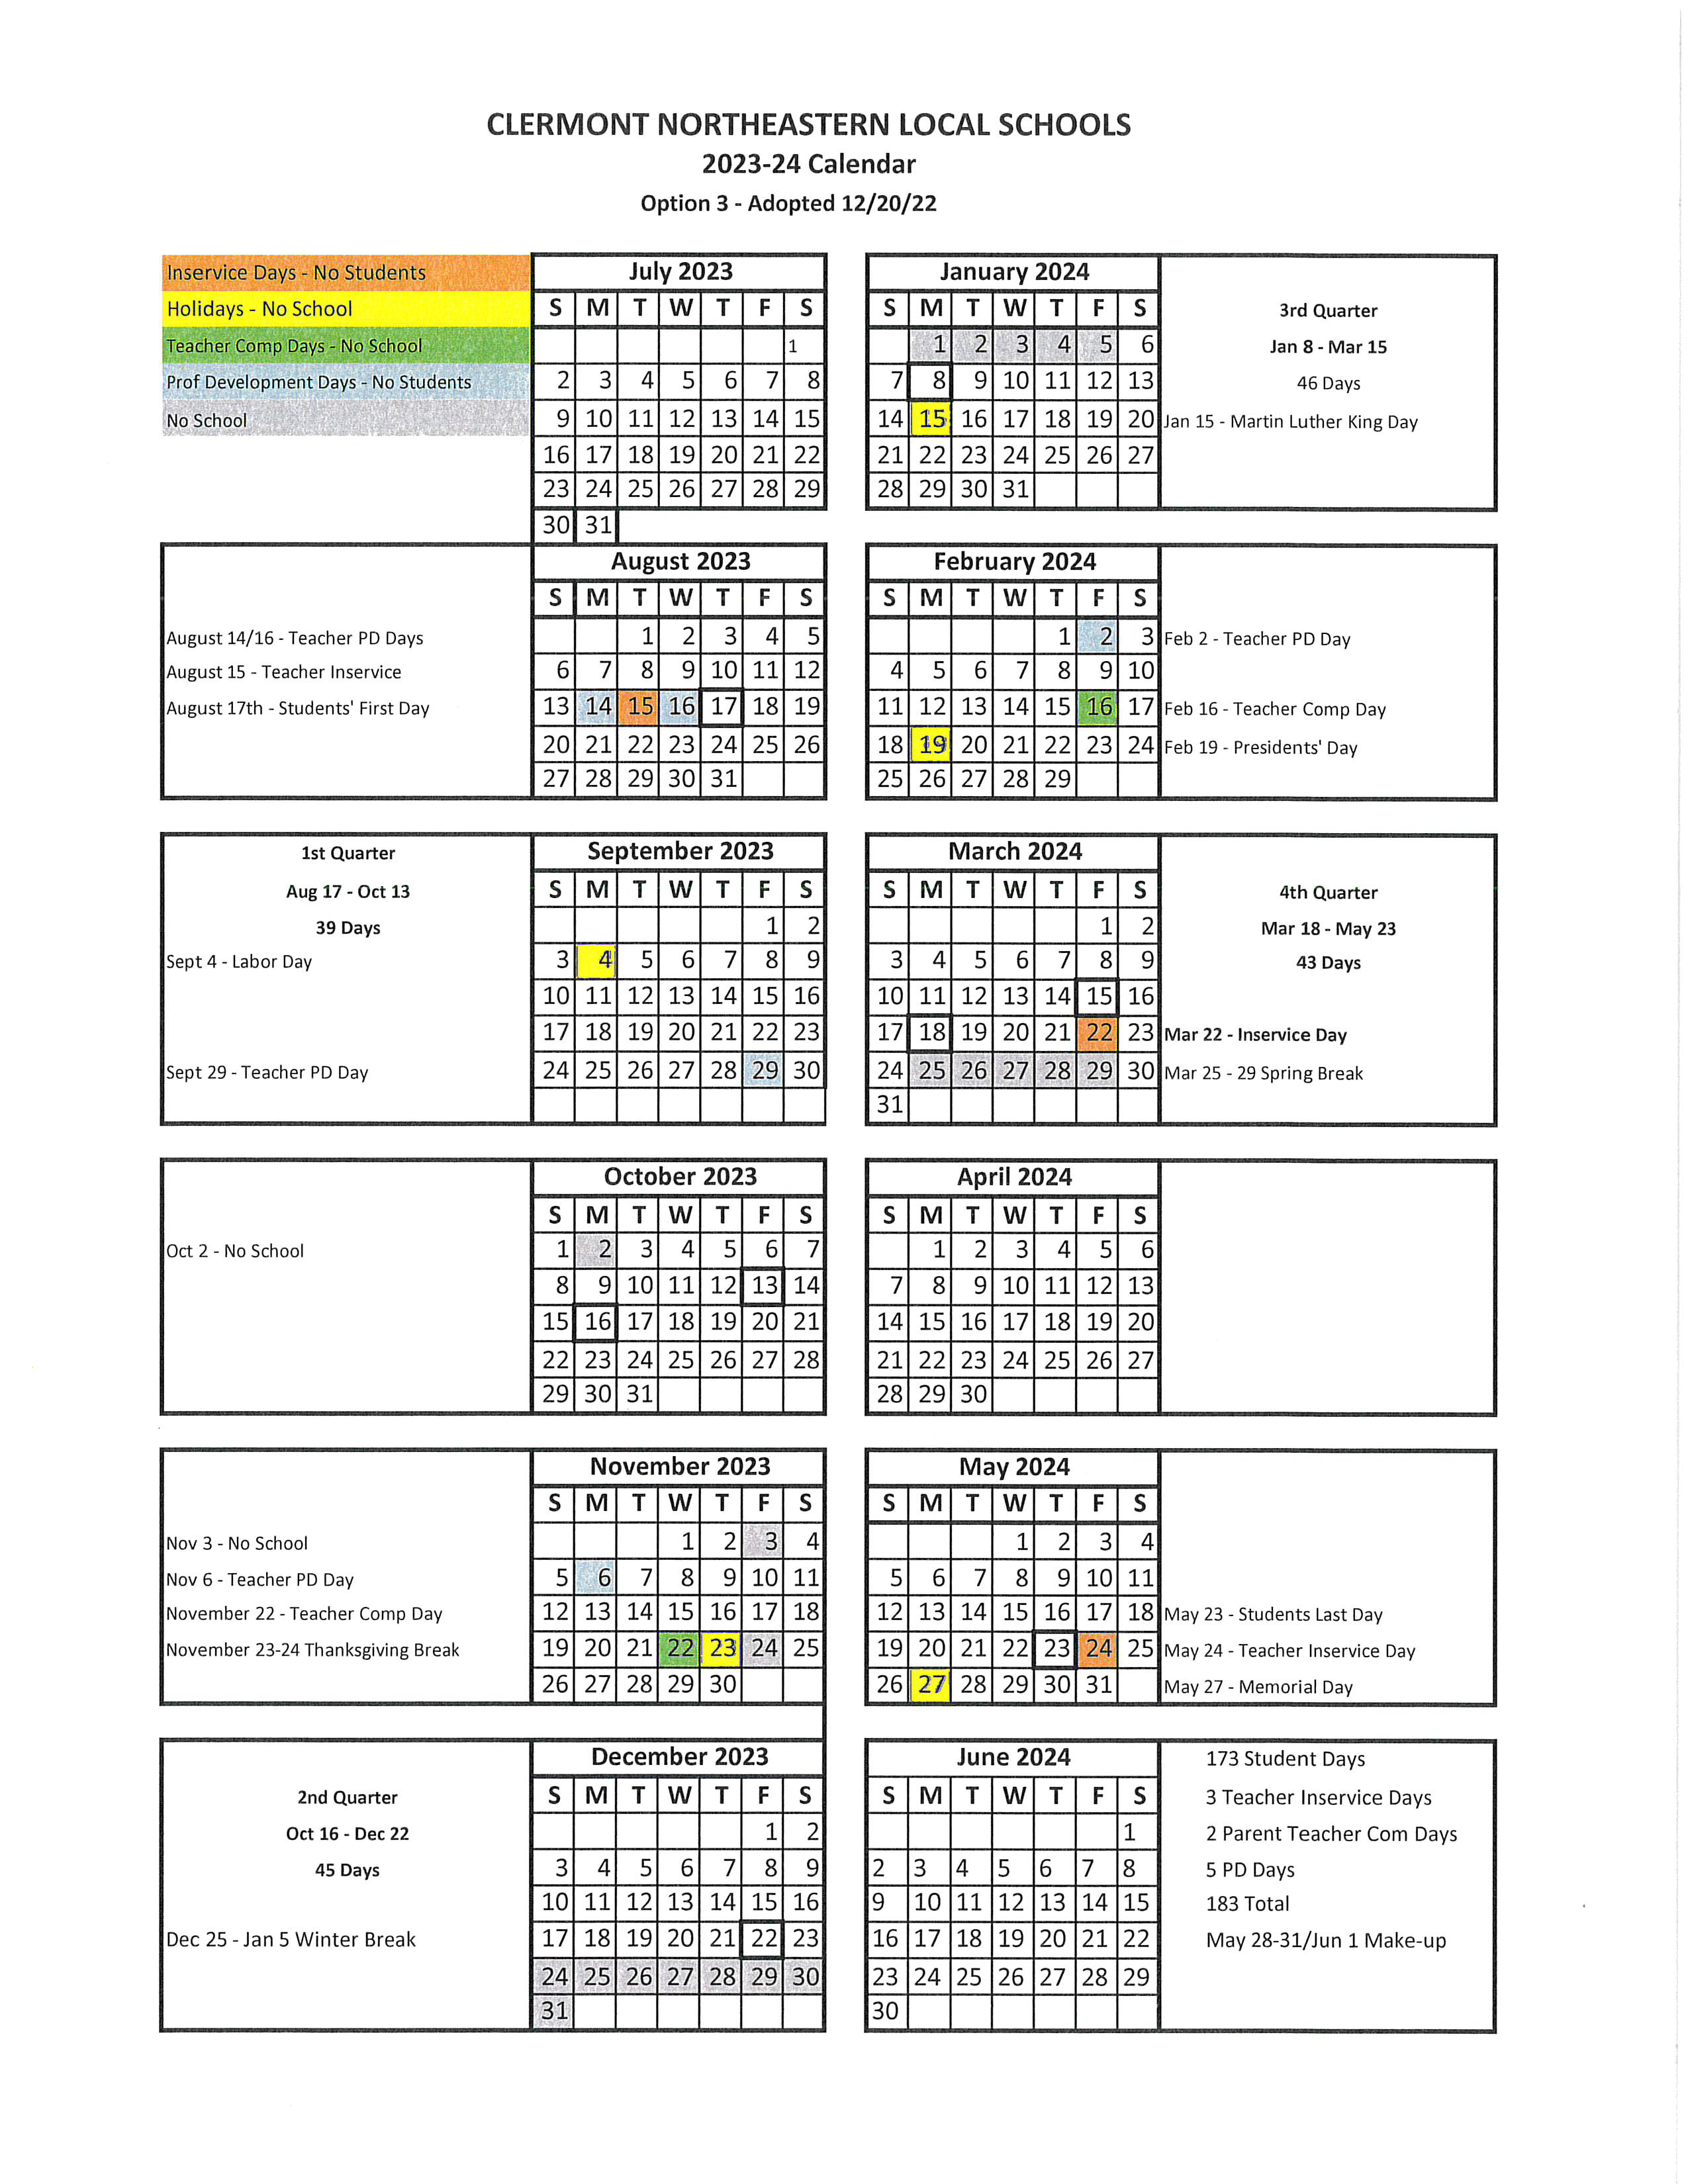 image of 23-24 calendar